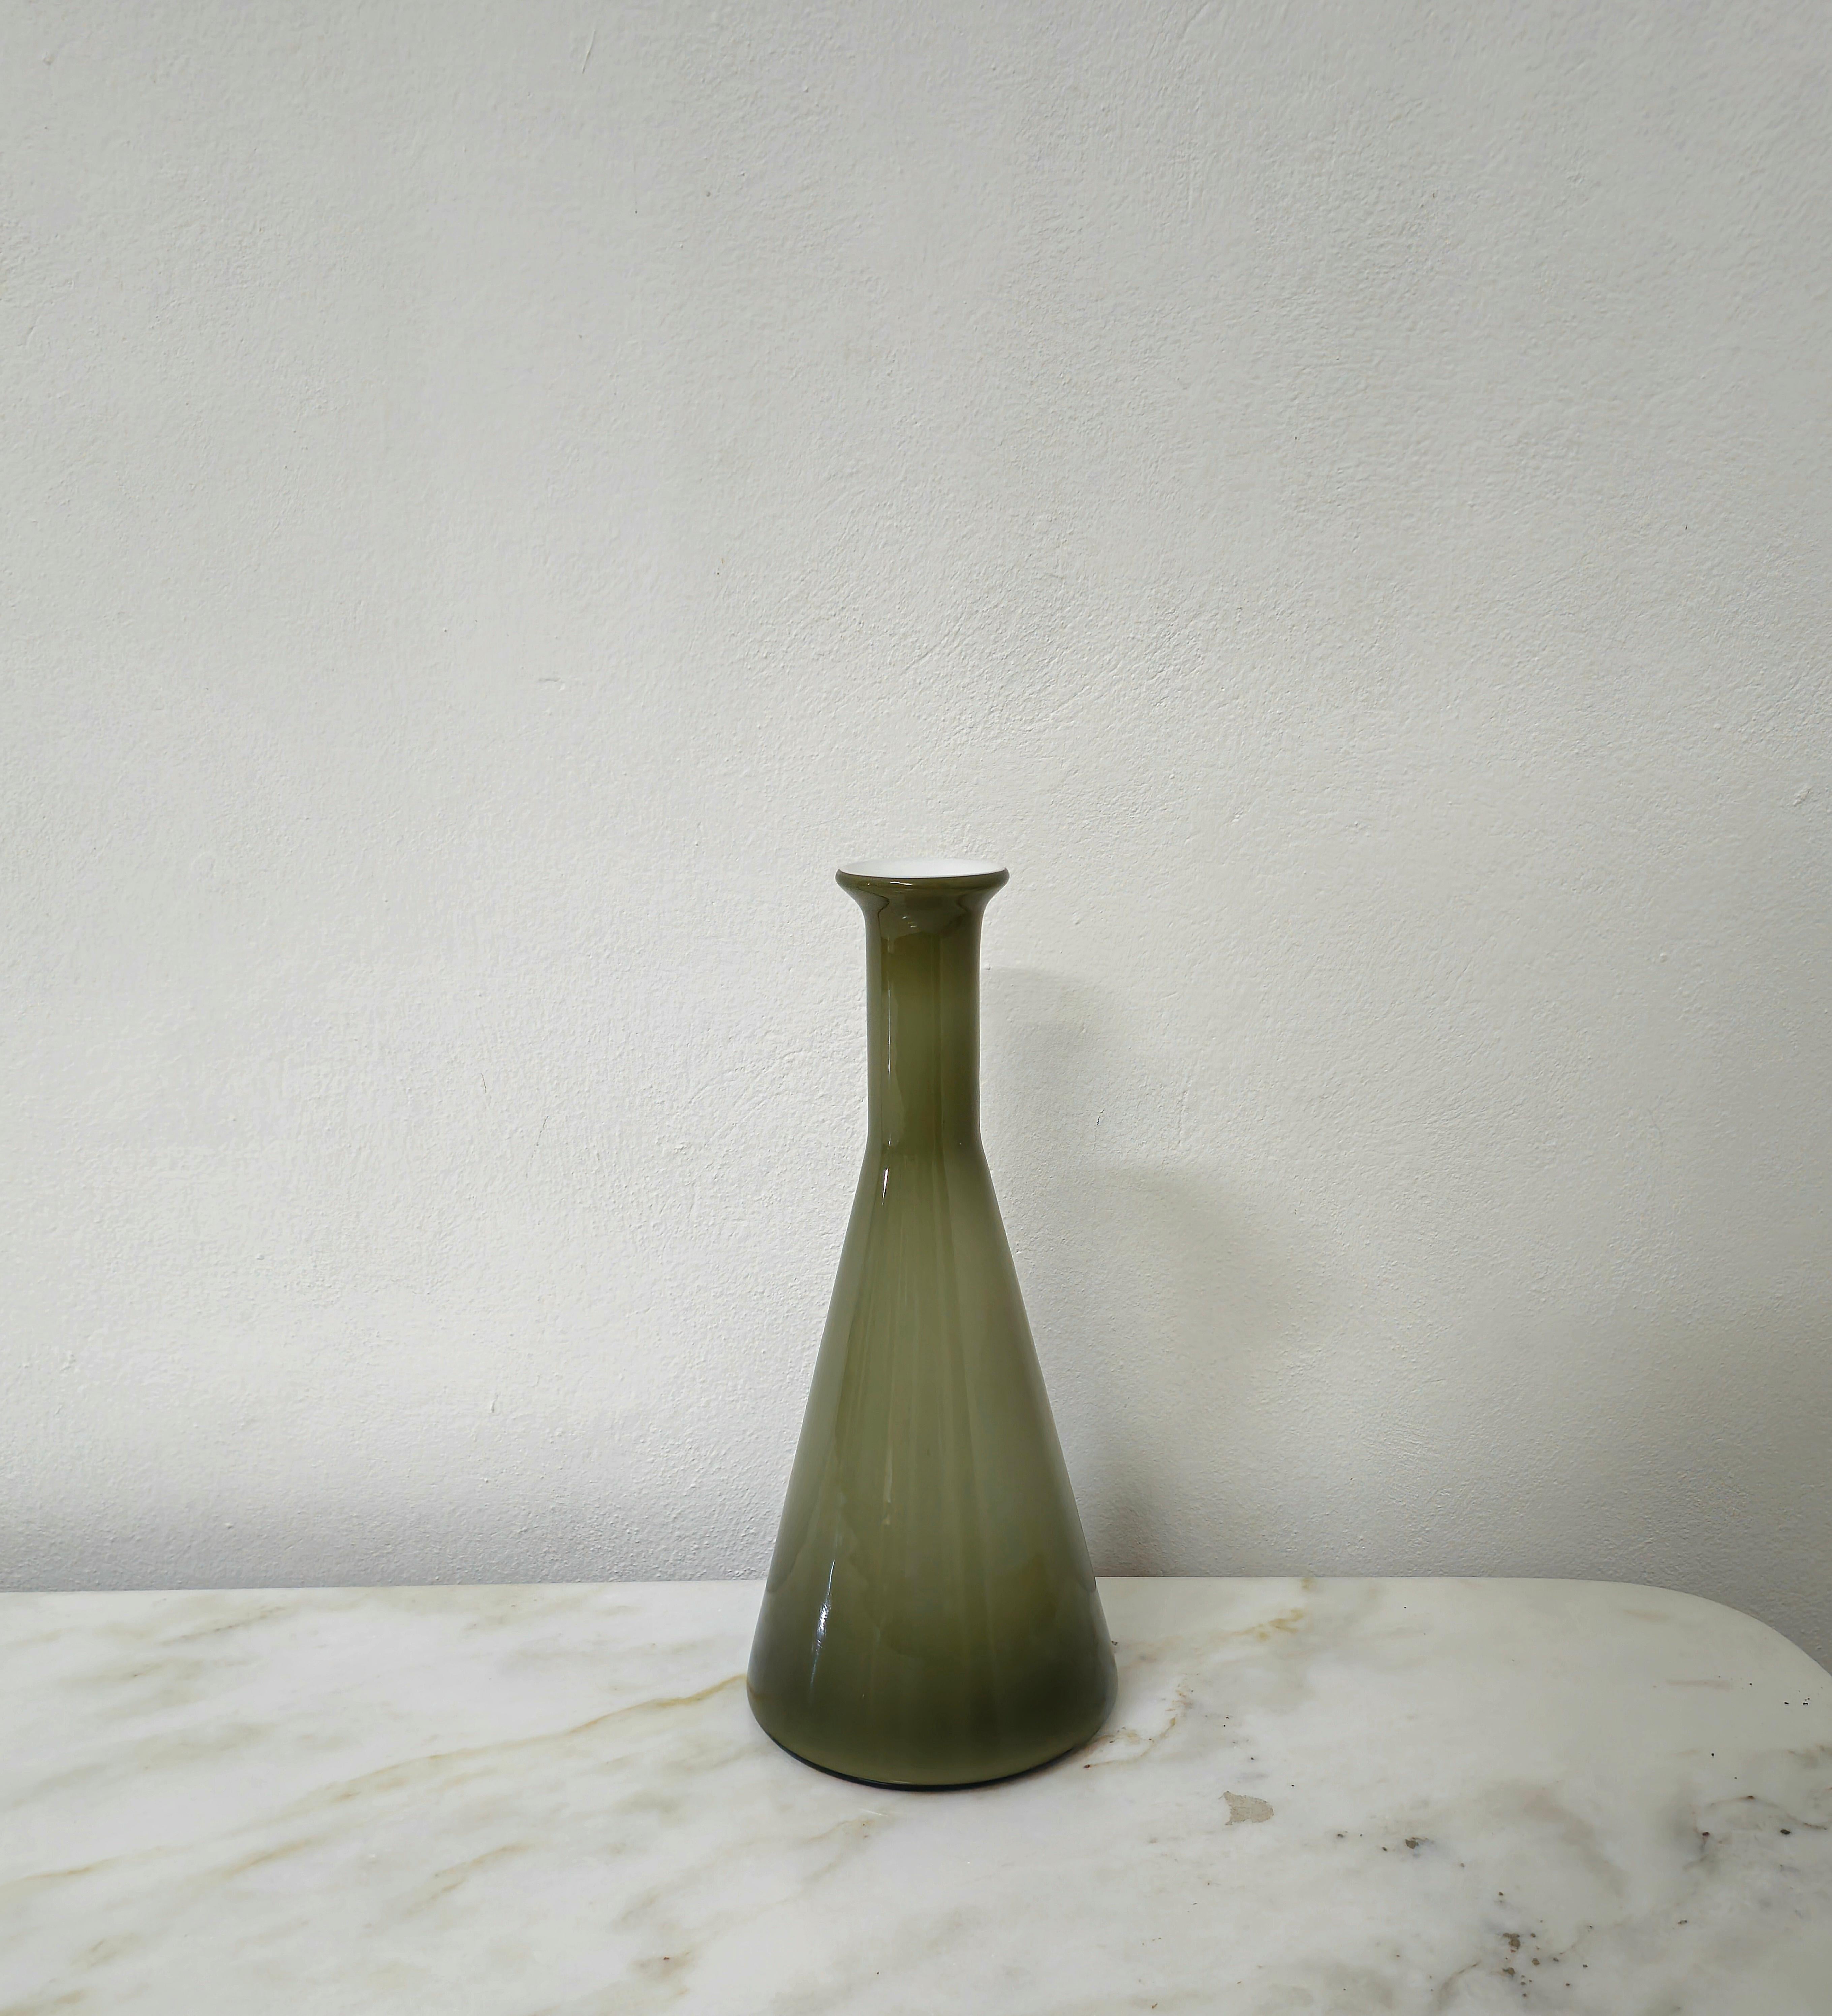 Vase Decorative Object Murano Glass Green Midcentury Modern Italian Design 1960s For Sale 2